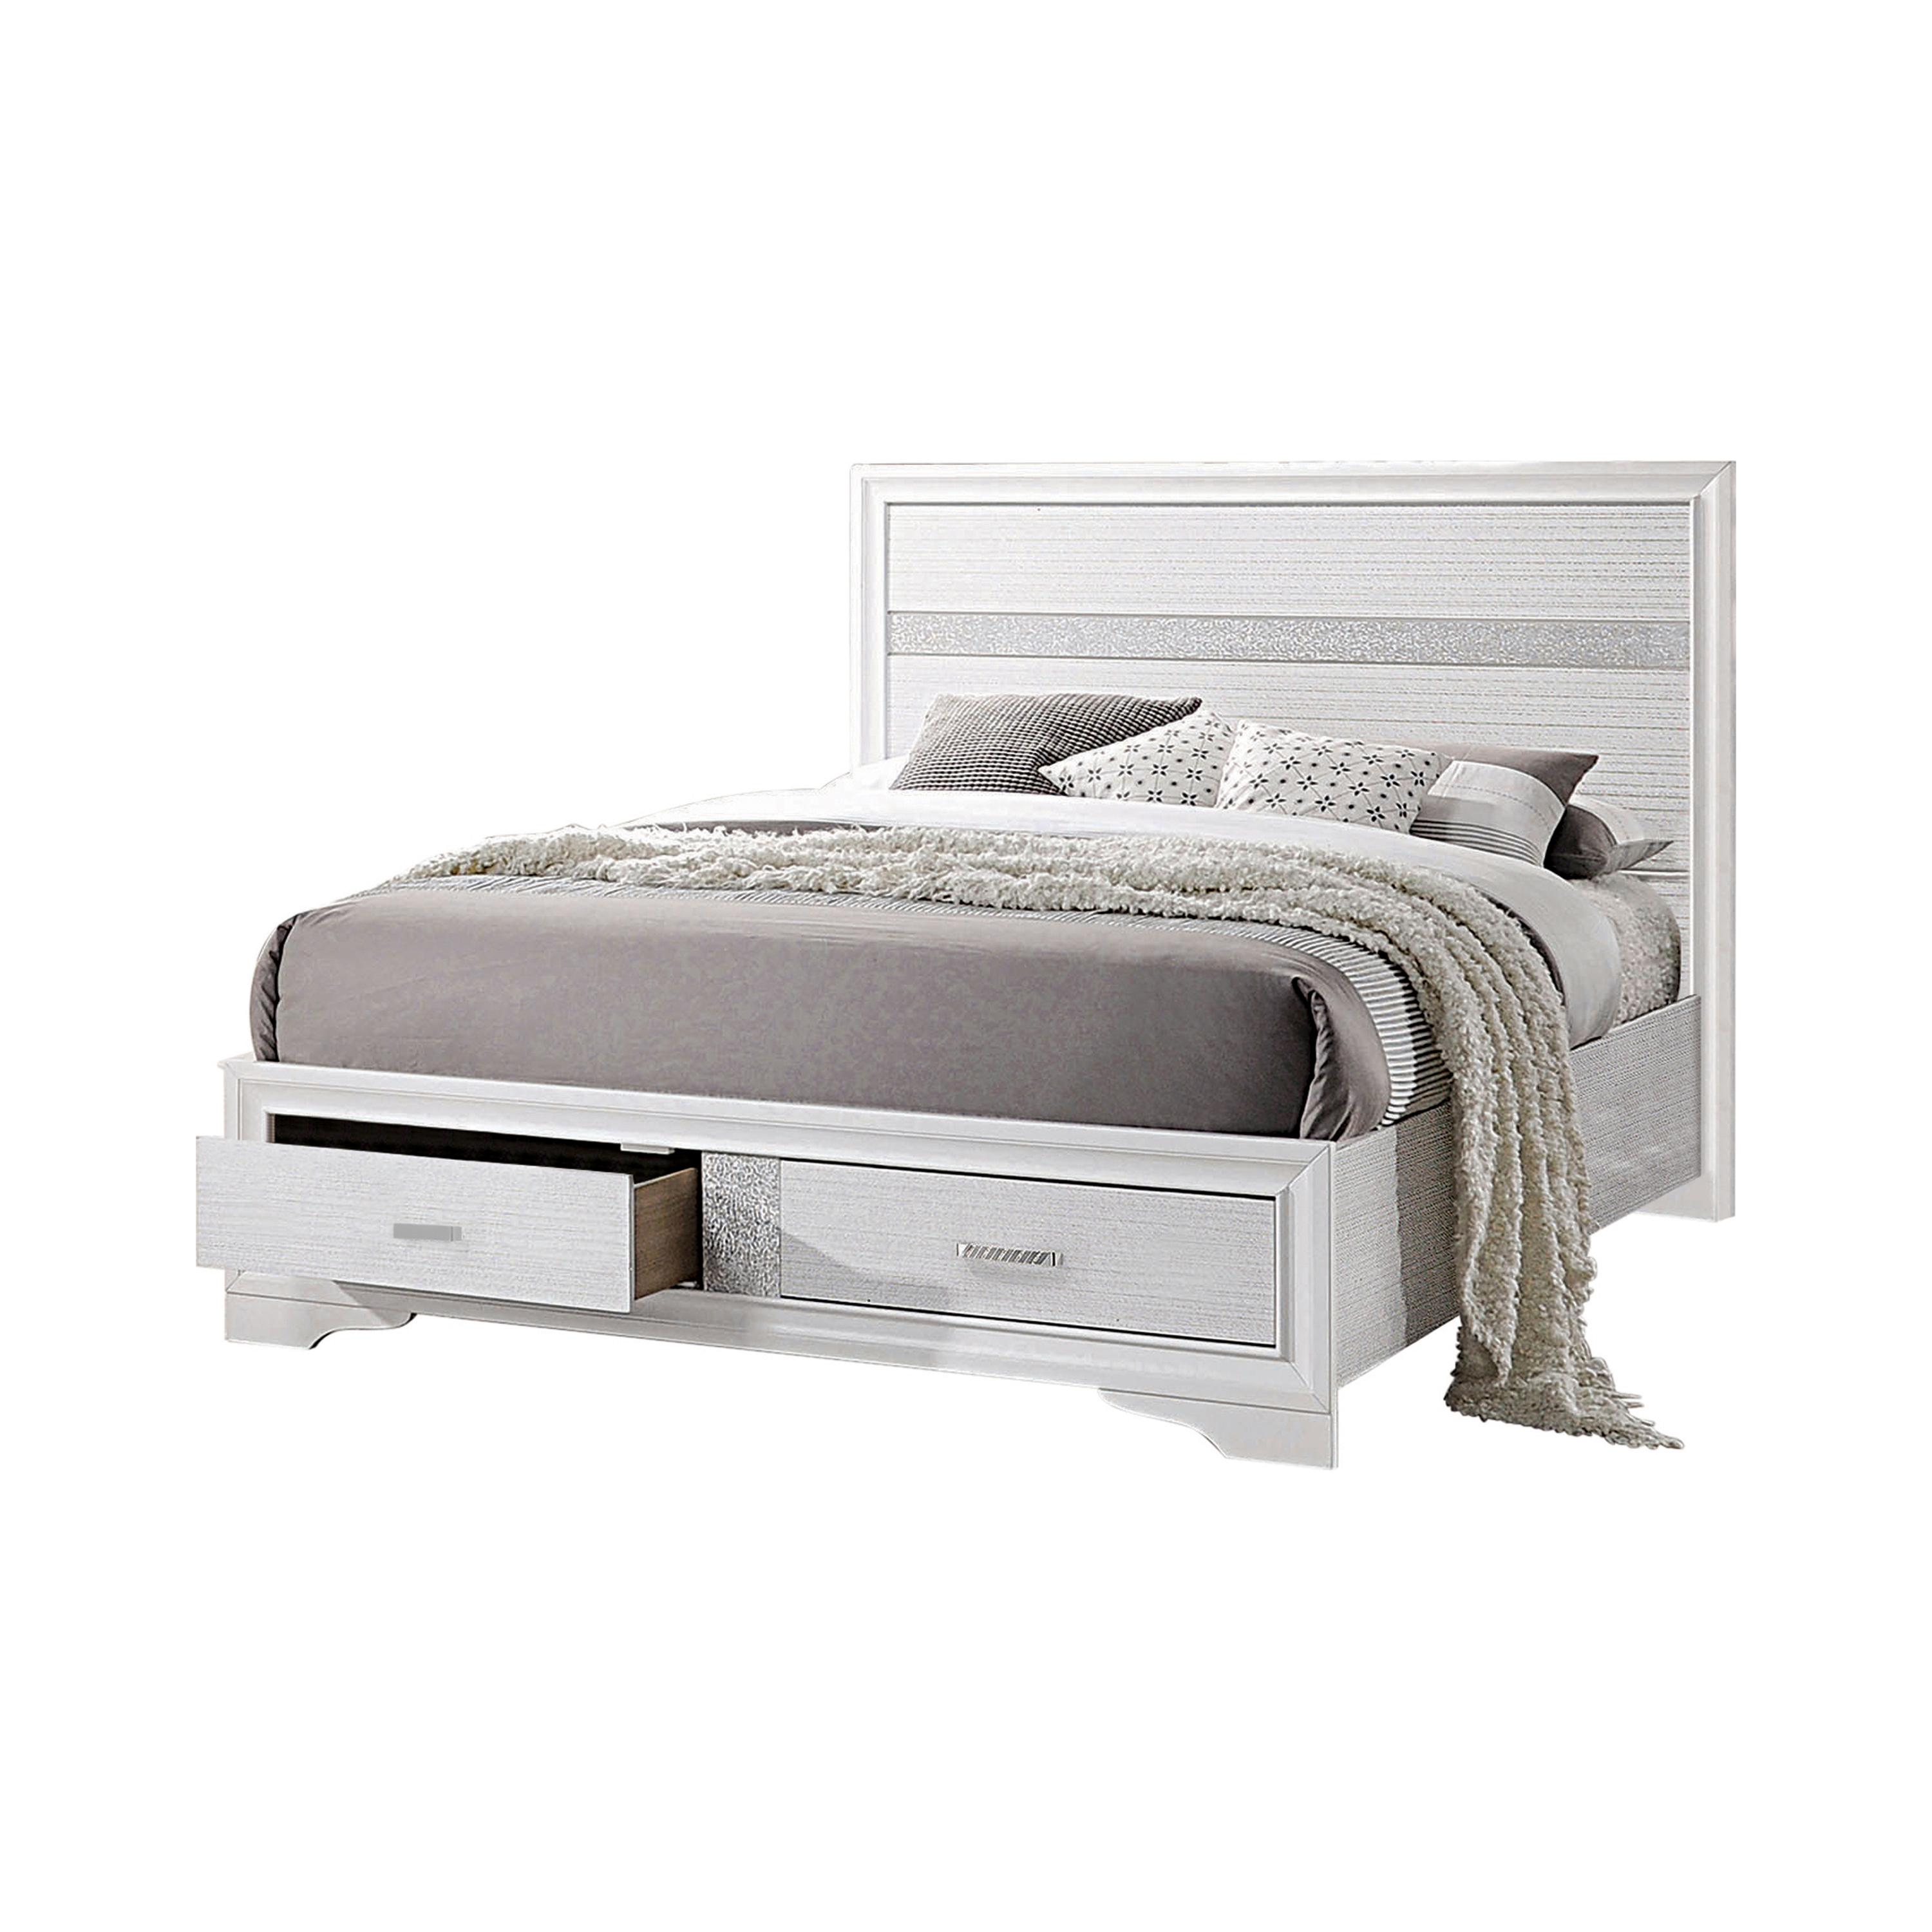 

    
Modern White Wood Queen Storage Bedroom Set 5pcs Coaster 205111Q Miranda
